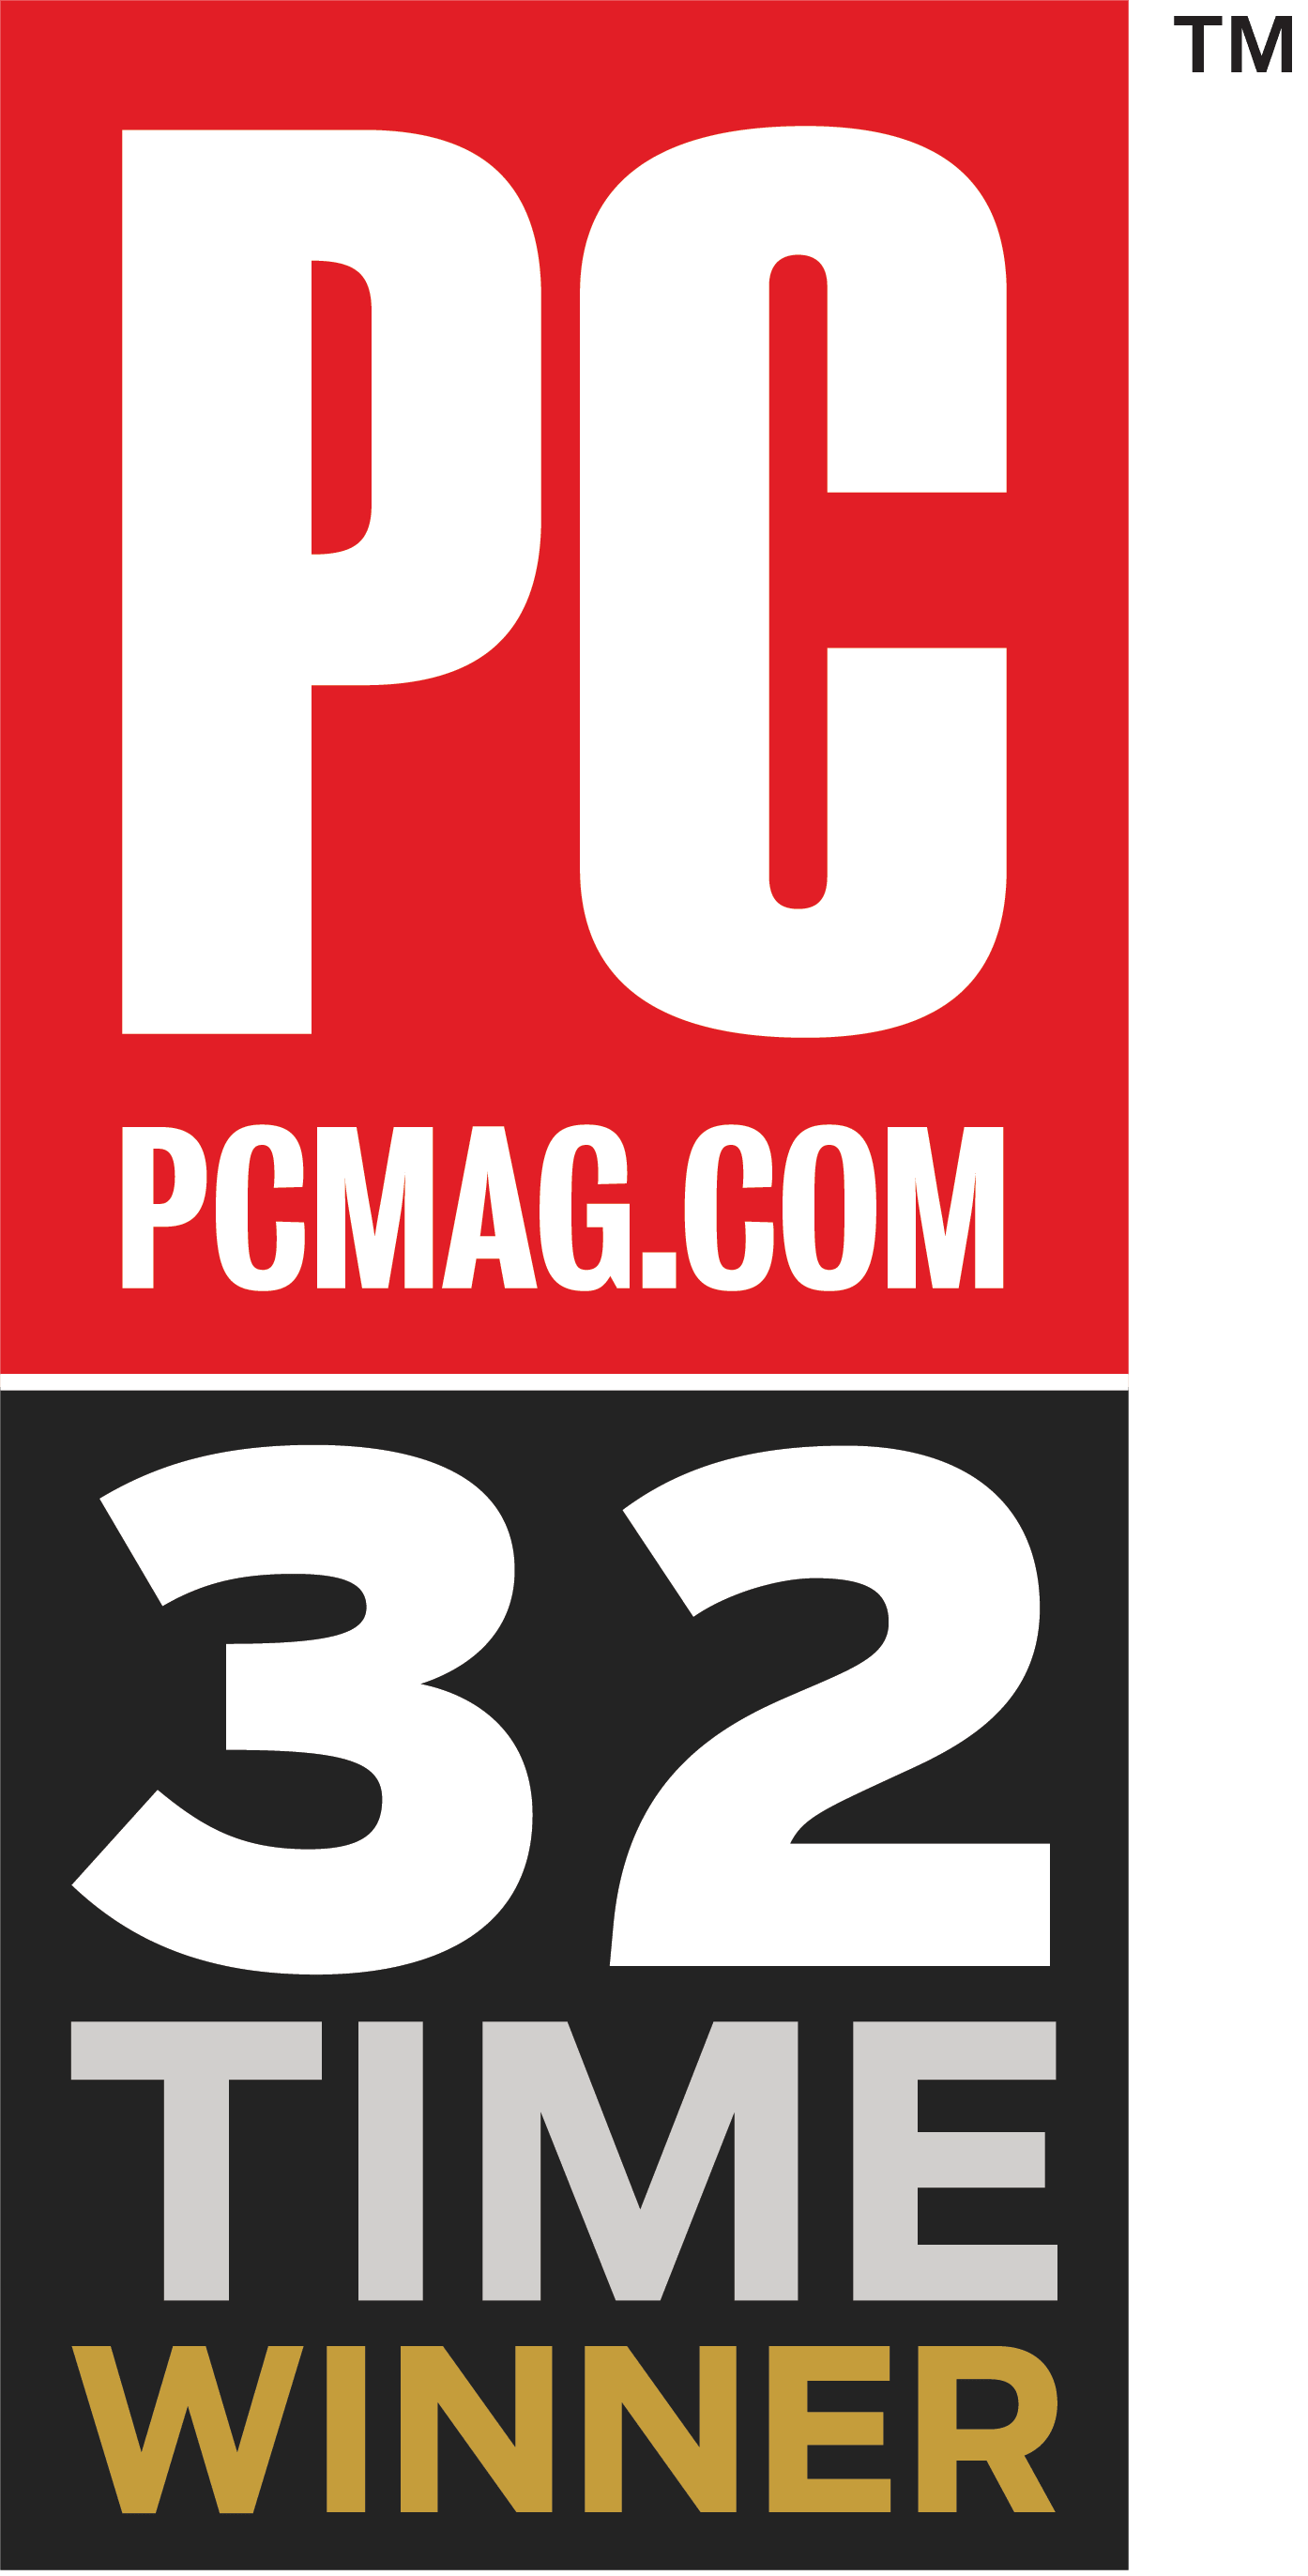 32 TIMES WINNER PC MAG